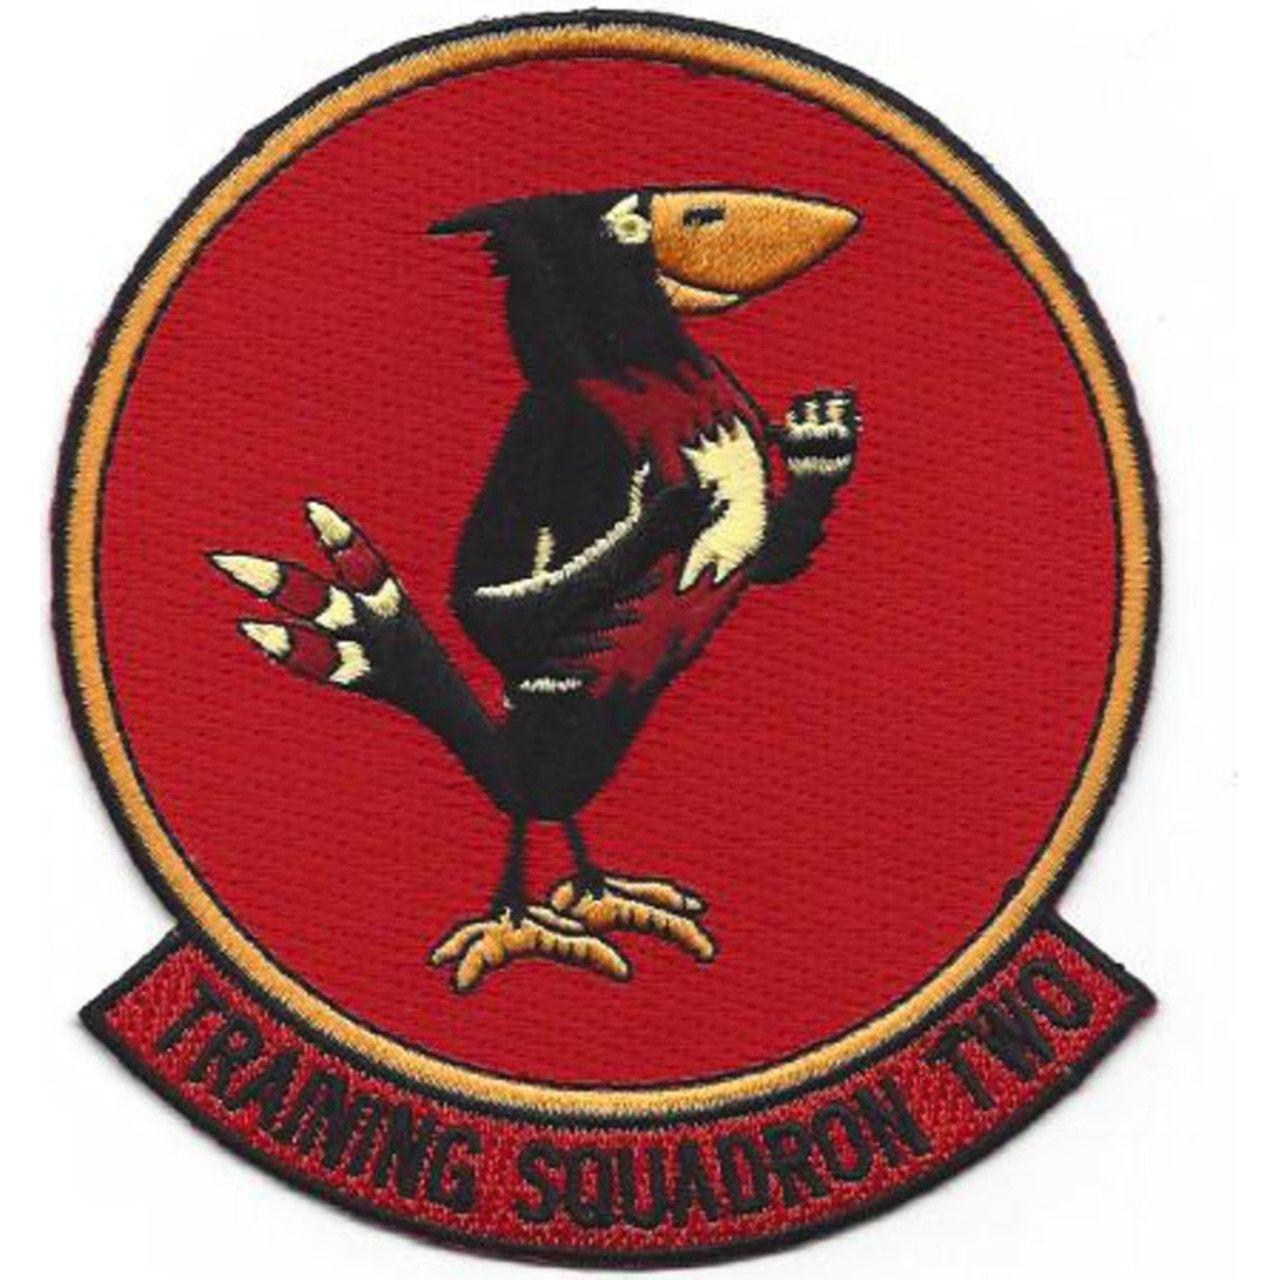 Vt-2 Logo - VT-2 Training Squadron Two Patch